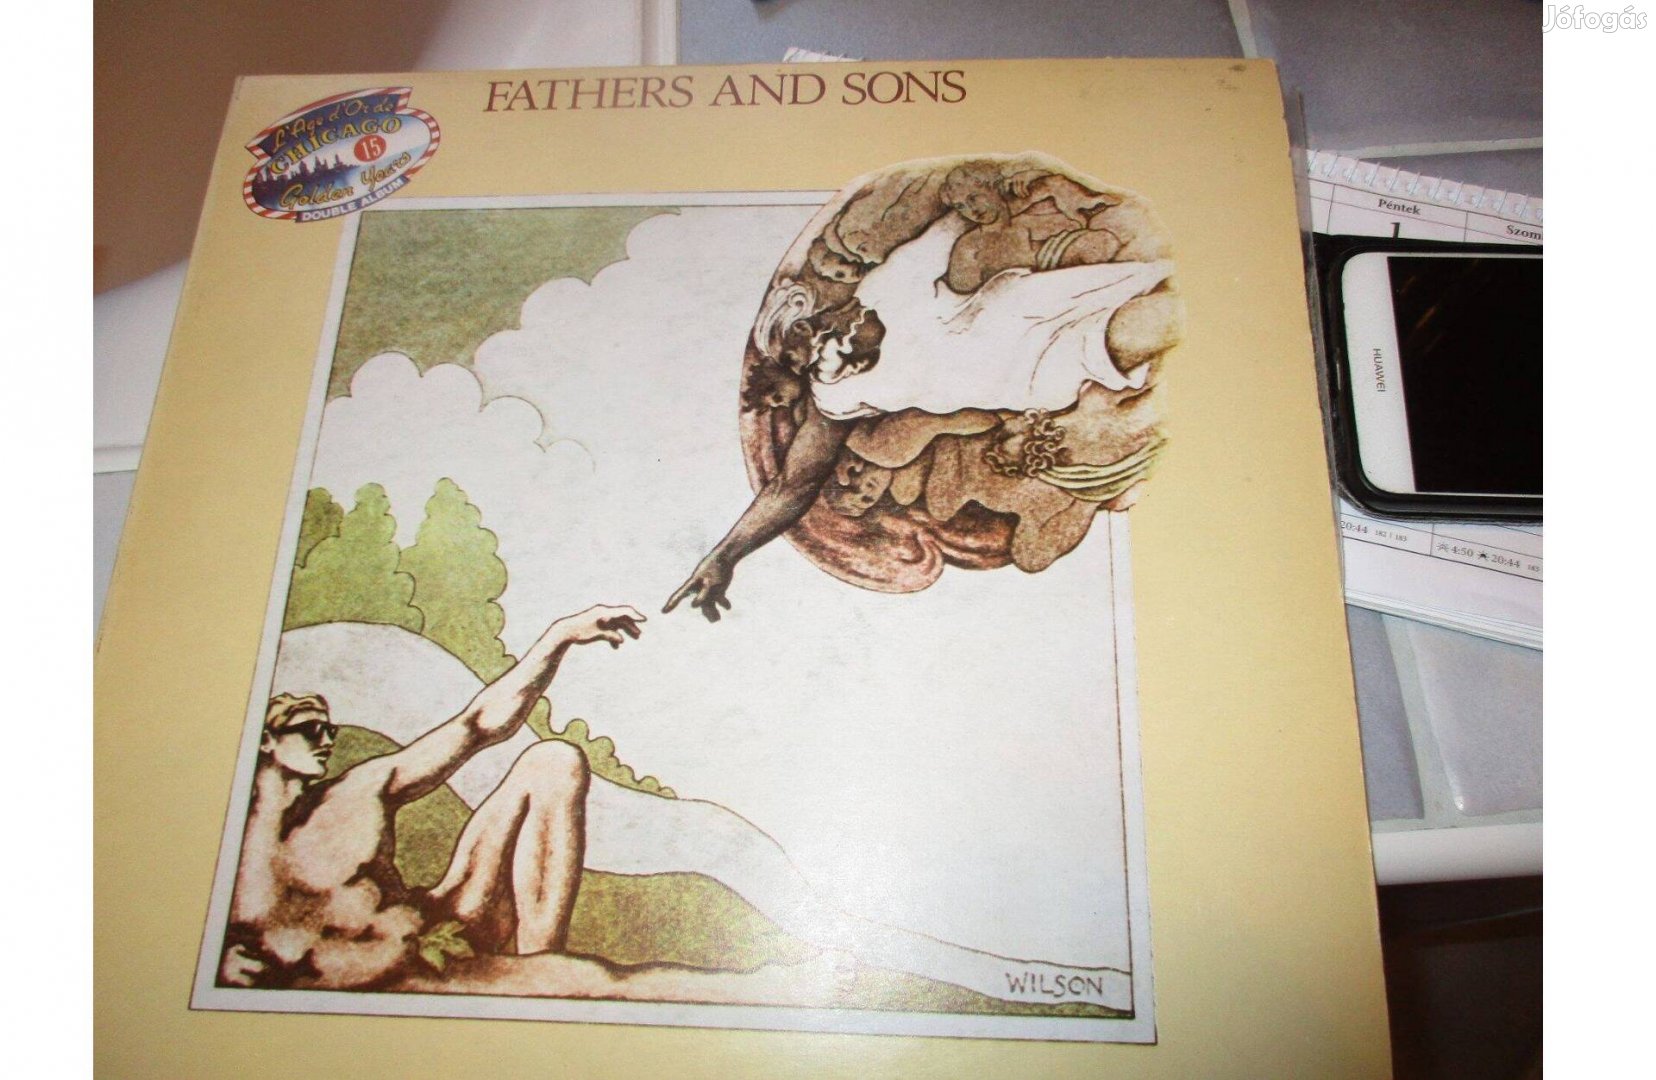 Fathers And Sons - 2 LP bakelit hanglemez eladó